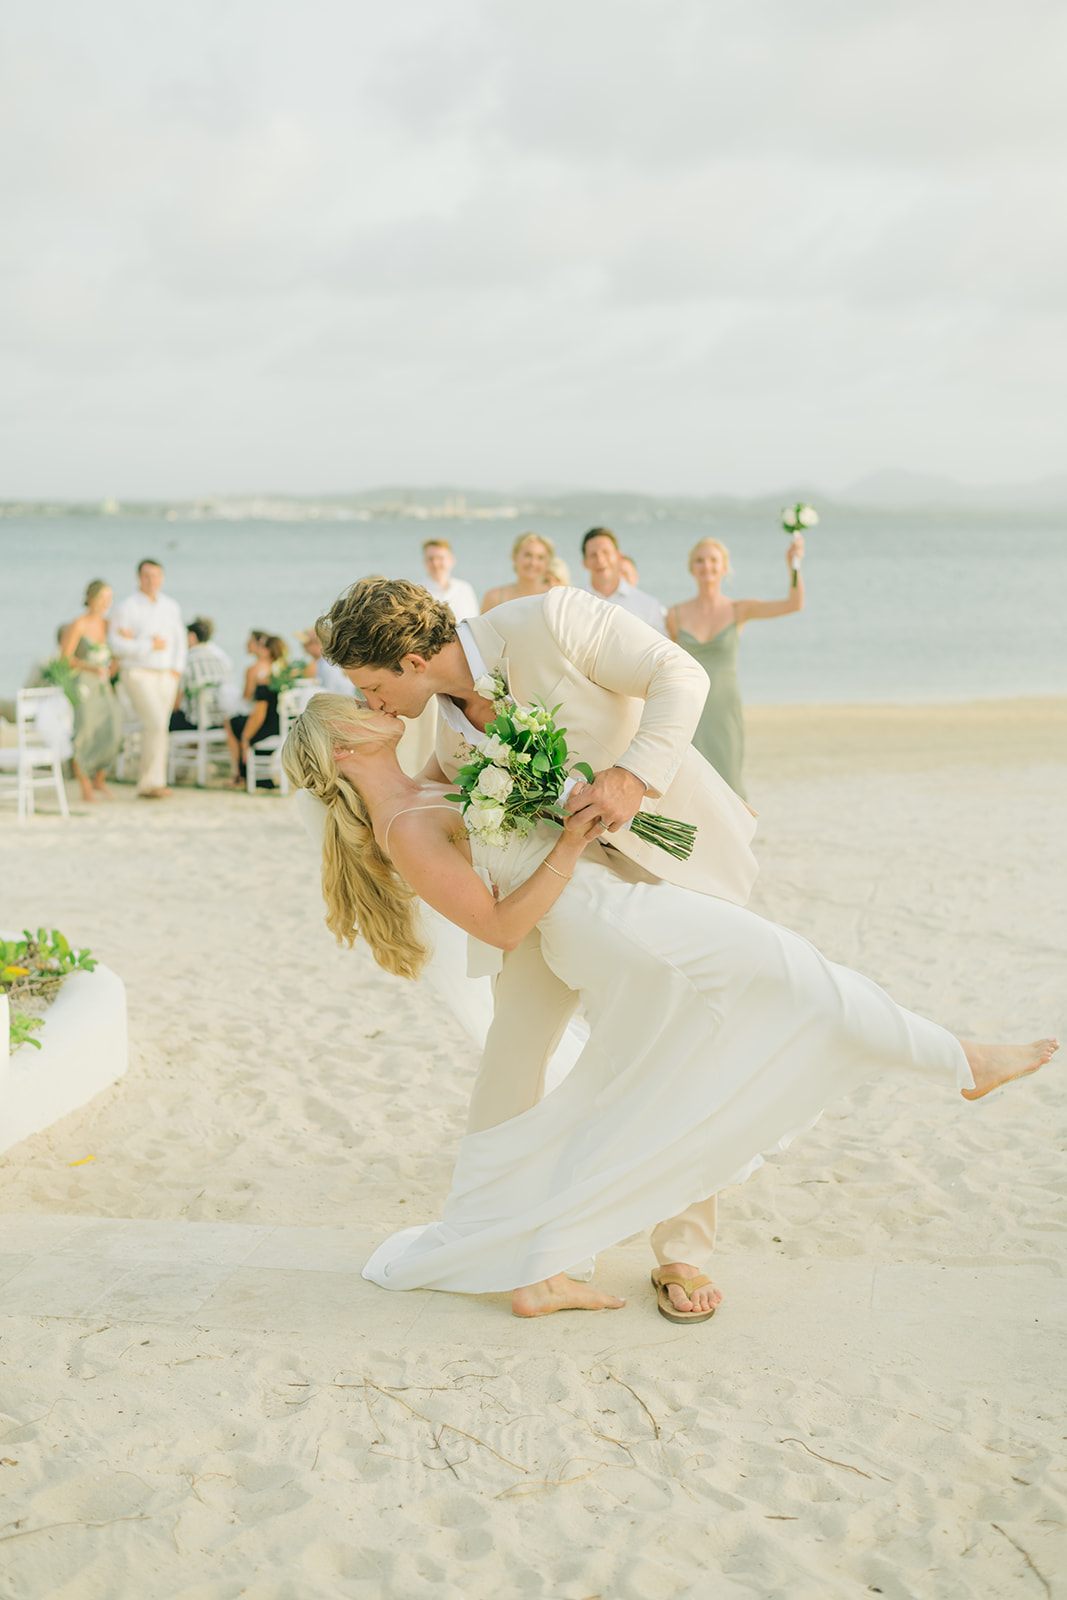 Candid wedding ceremony photos by top Antigua photographer
